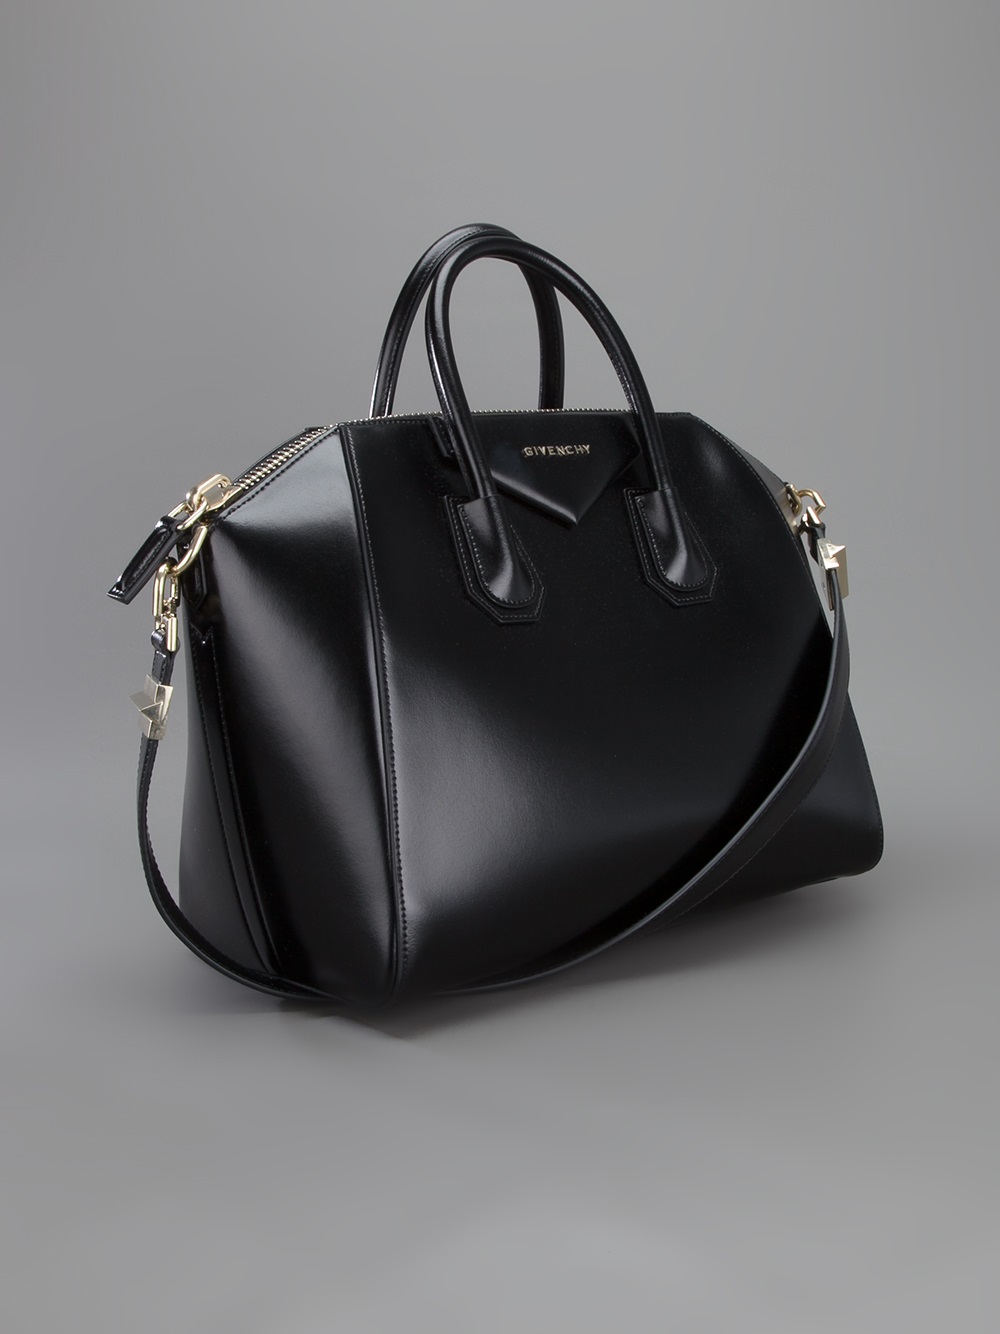 Givenchy Leather Medium 'antigona' Tote in Black - Lyst